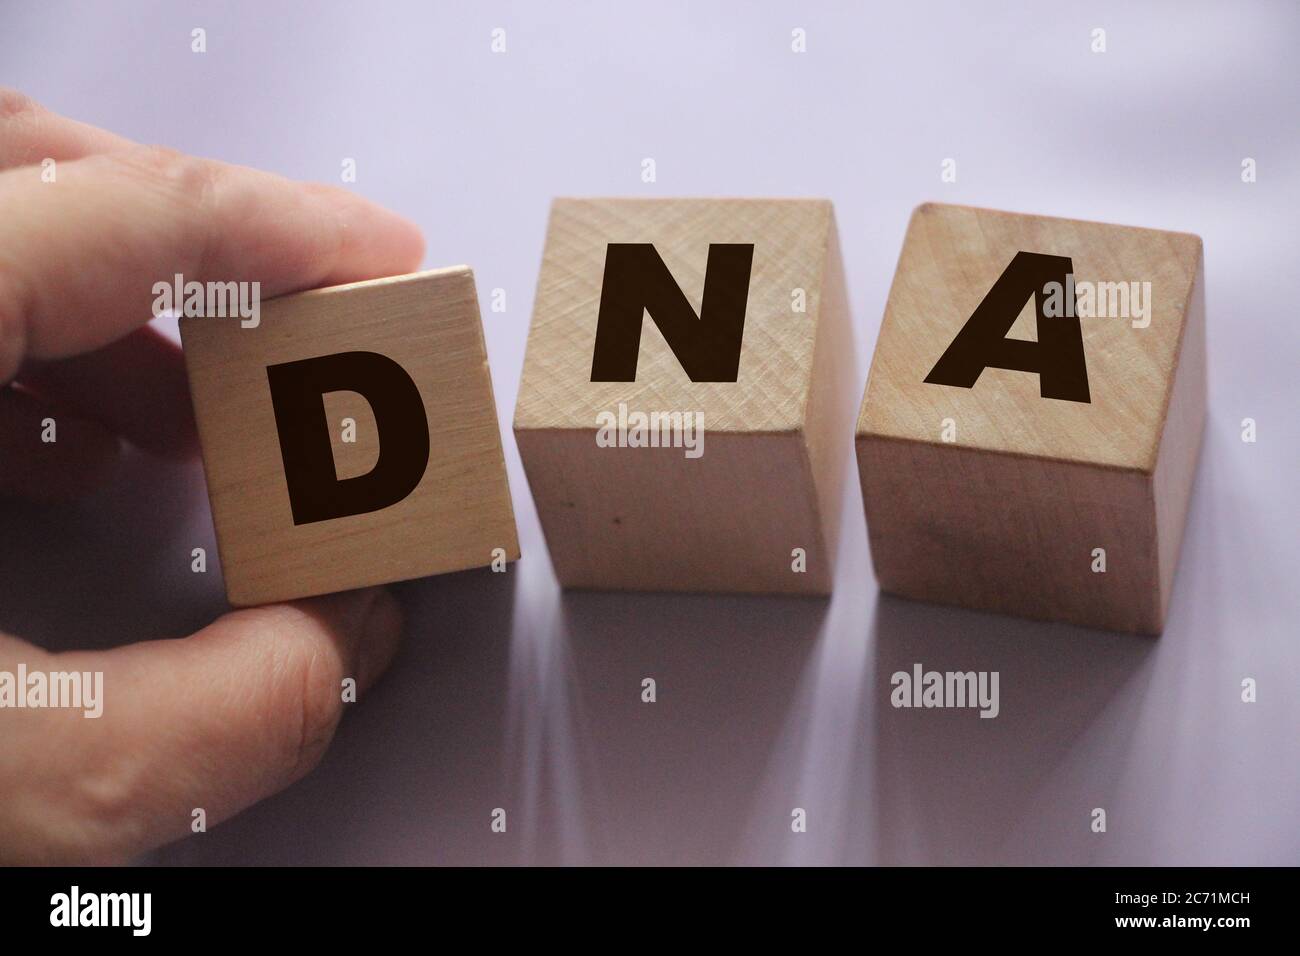 DNA abbreviation on wooden Building Blocks. Genetics concept Stock Photo